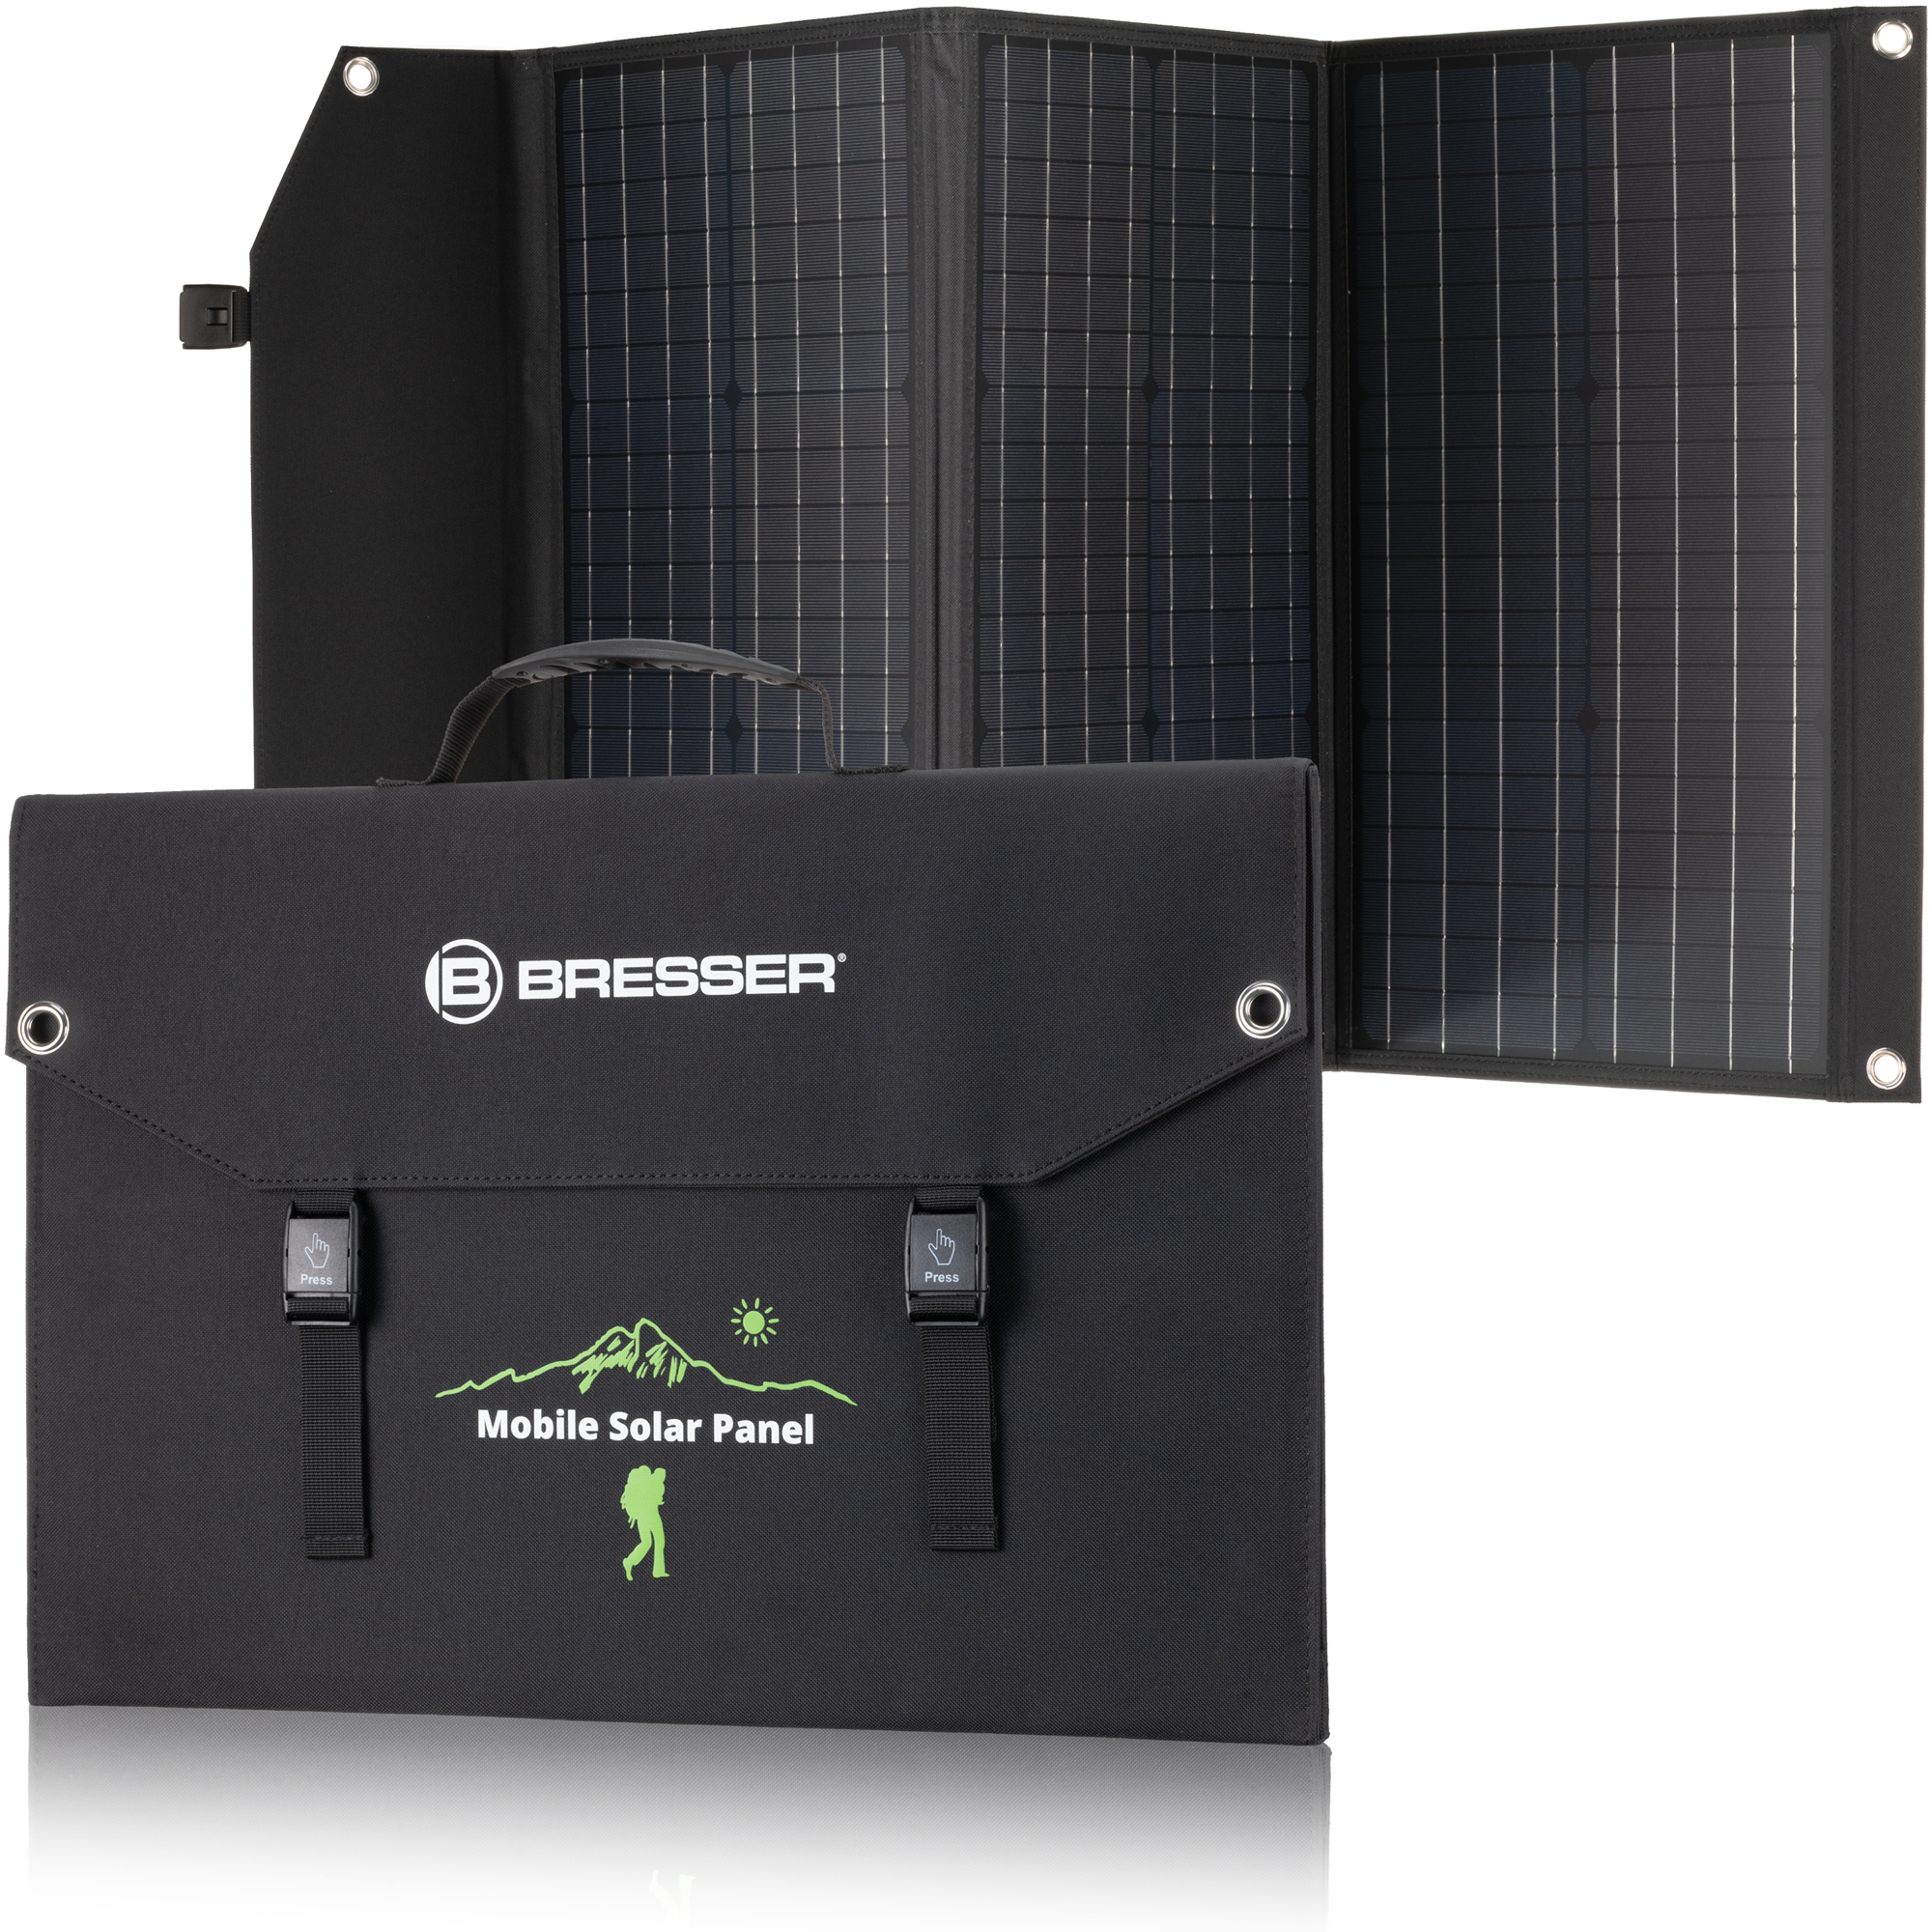 Bresser Mobile Solar Panel 120 Watt mit USB